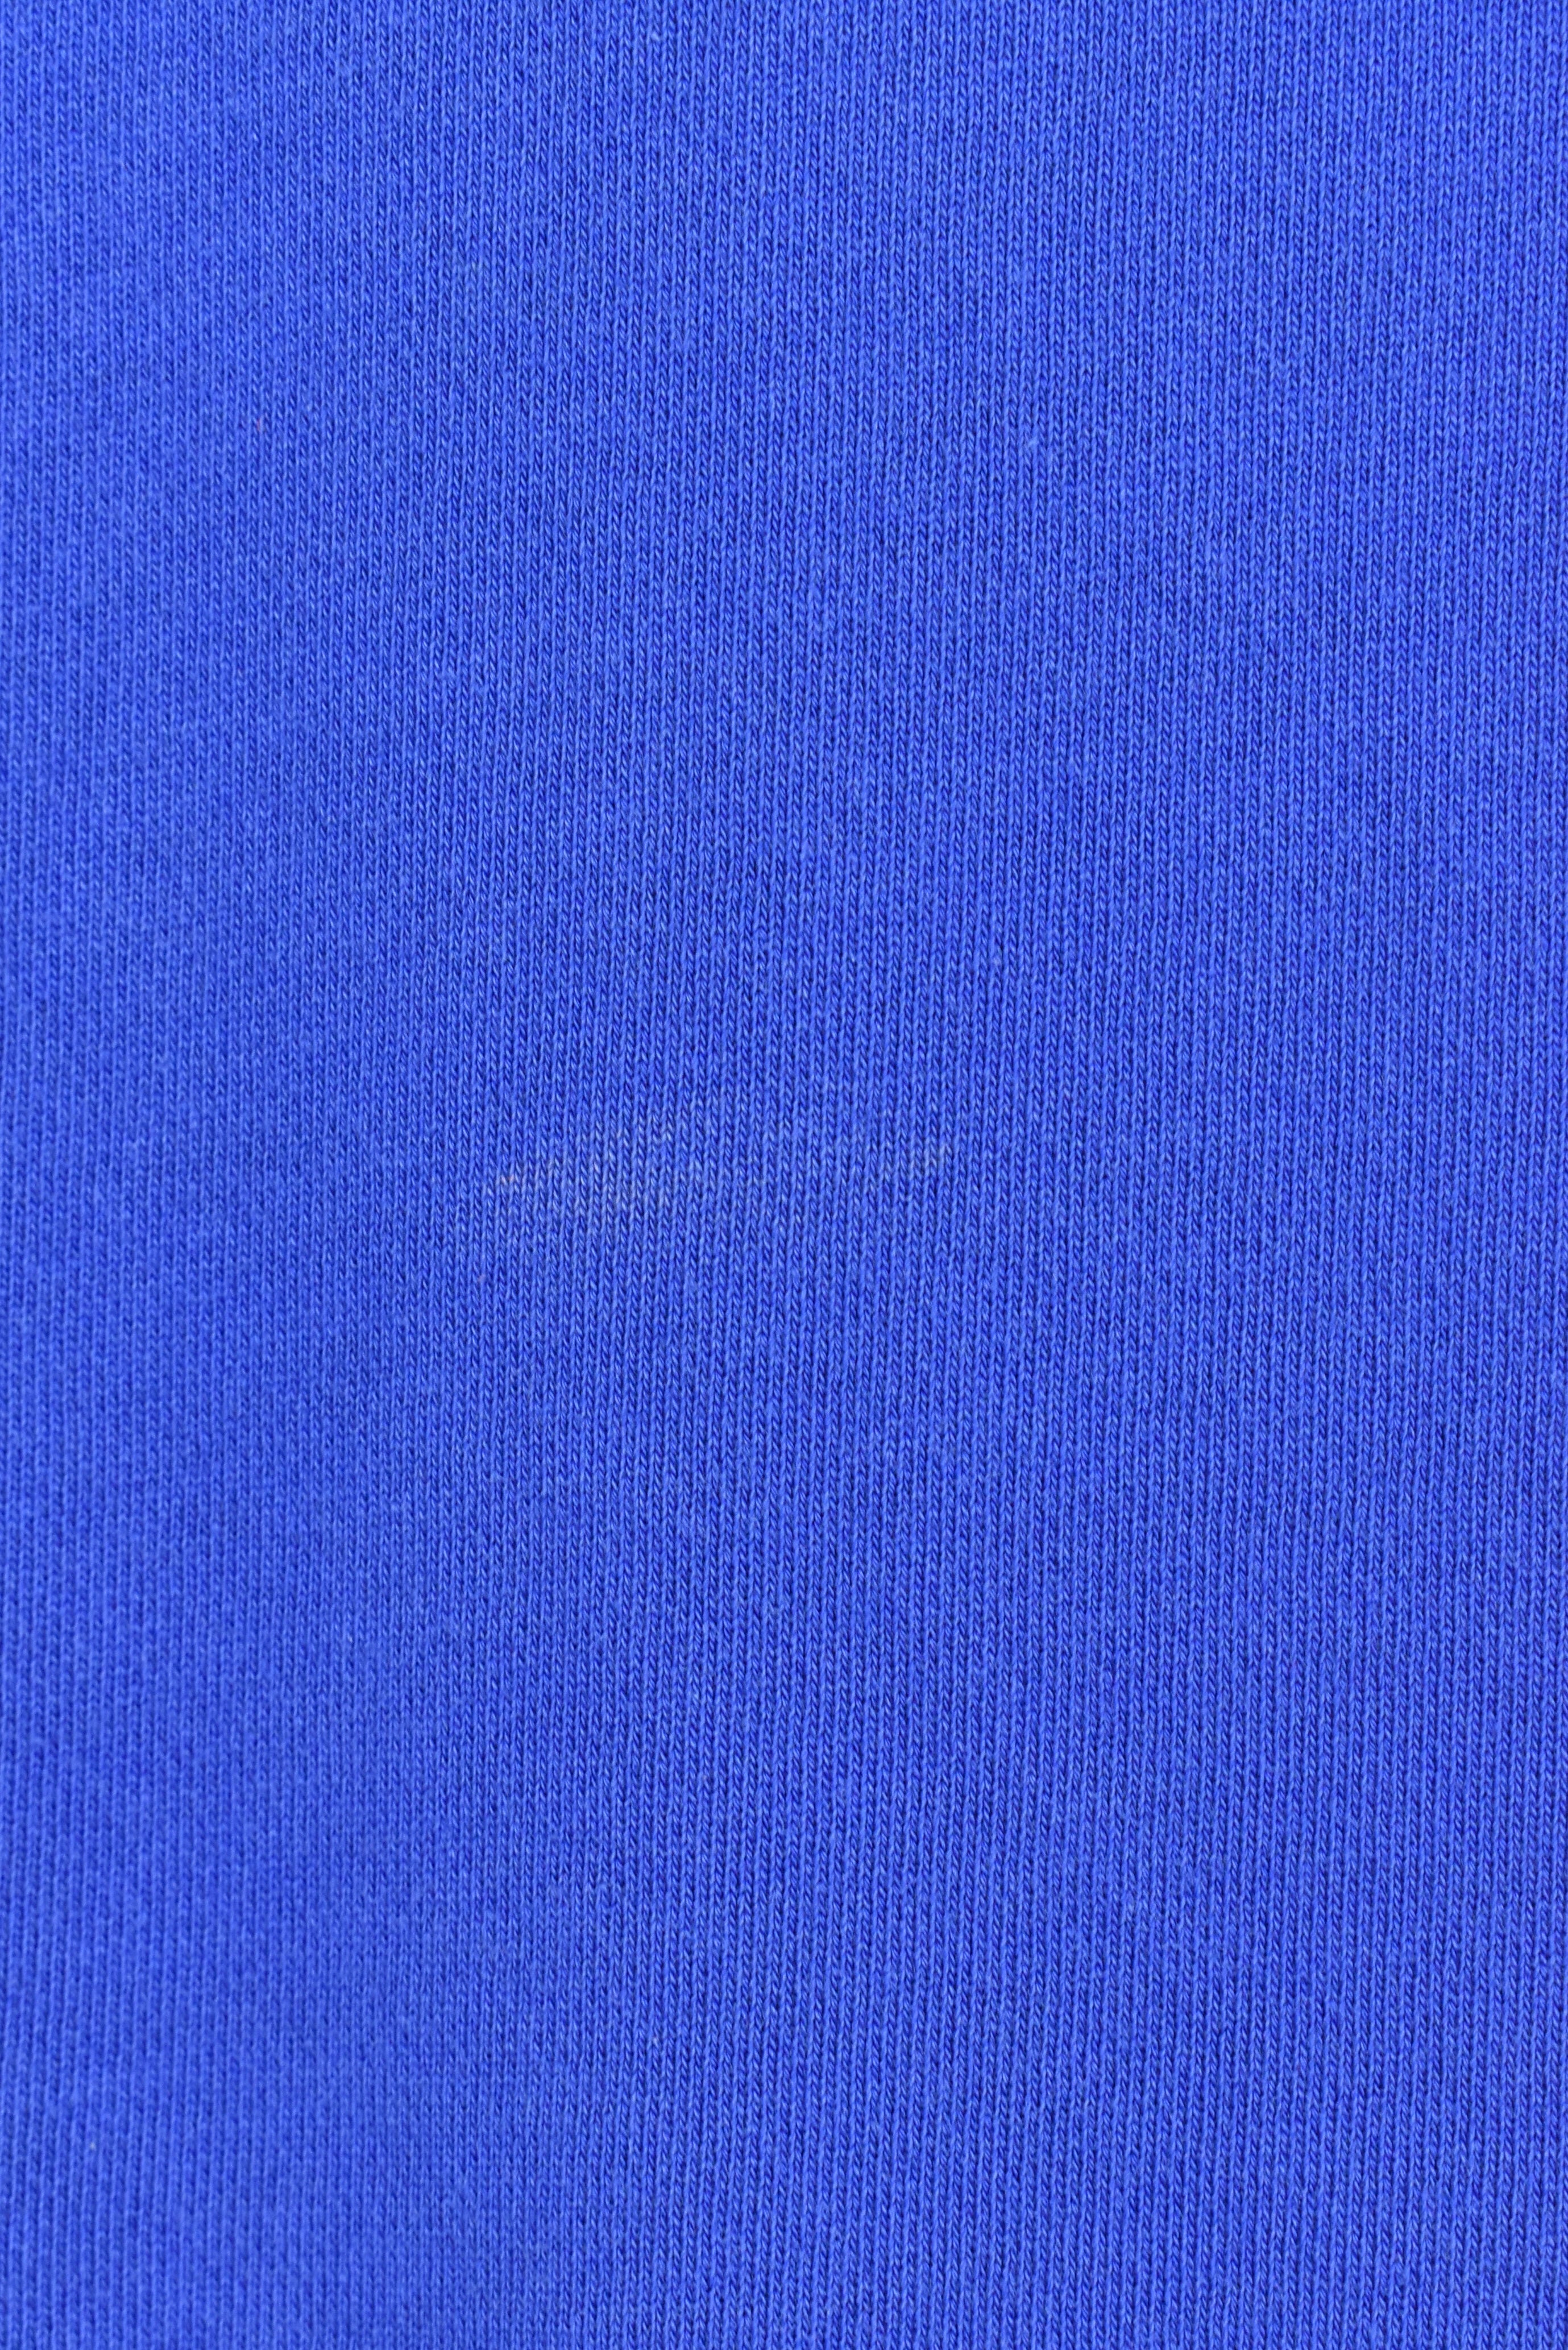 Vintage Ralph Lauren sweatshirt, Polo Sport blue embroidered crewneck - AU Large RALPH LAUREN